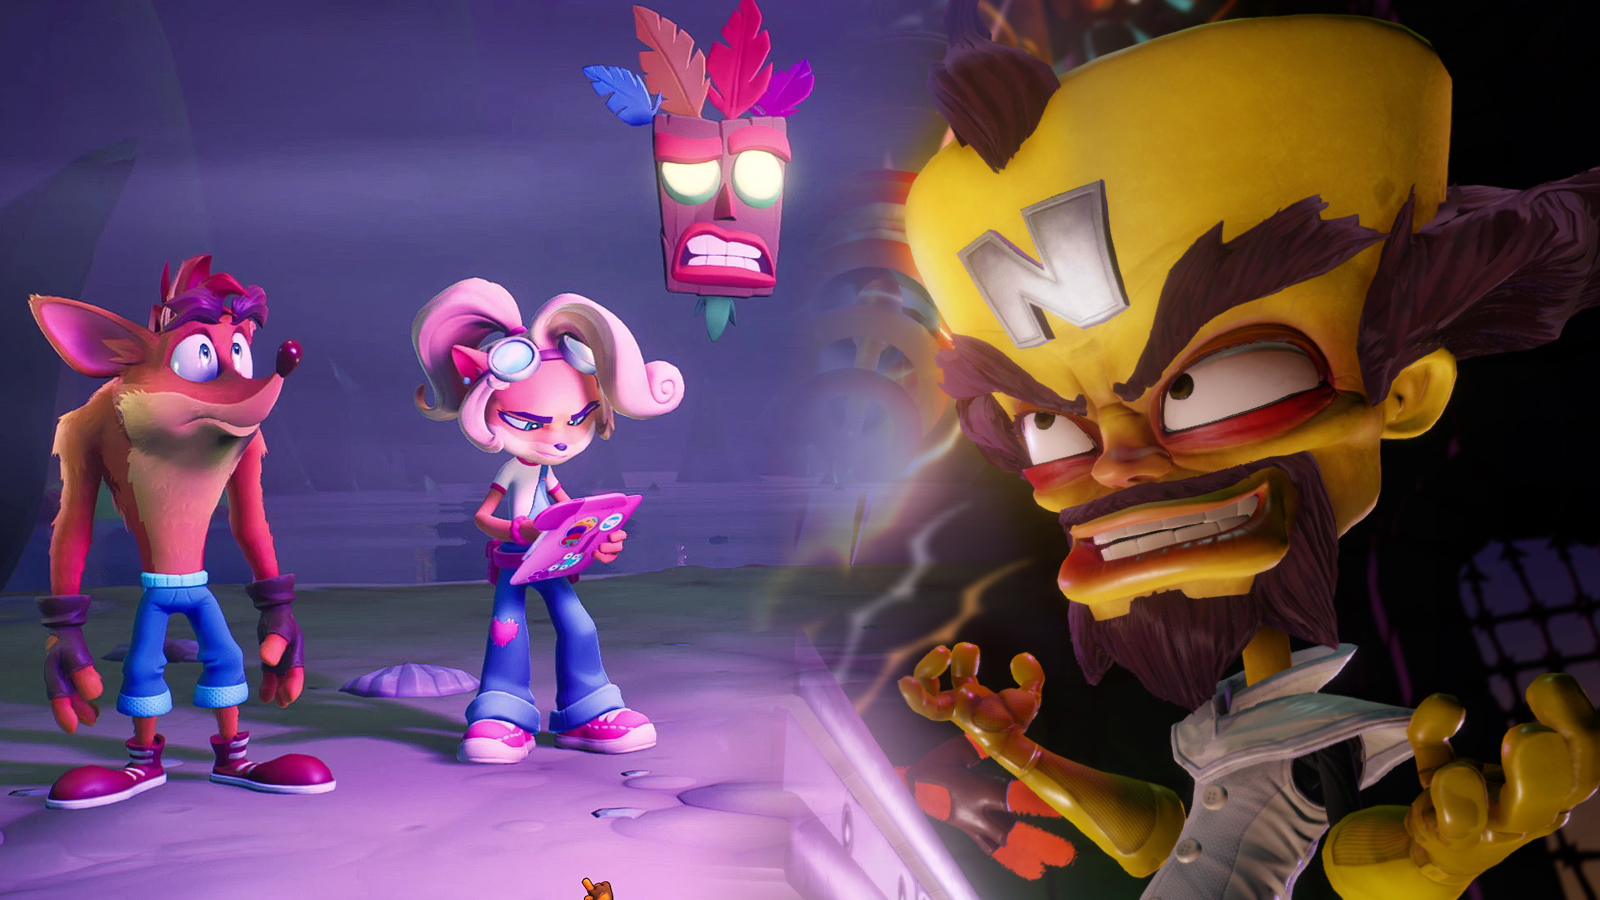 Crash Bandicoot movie teased by developer following Mario Bros. success